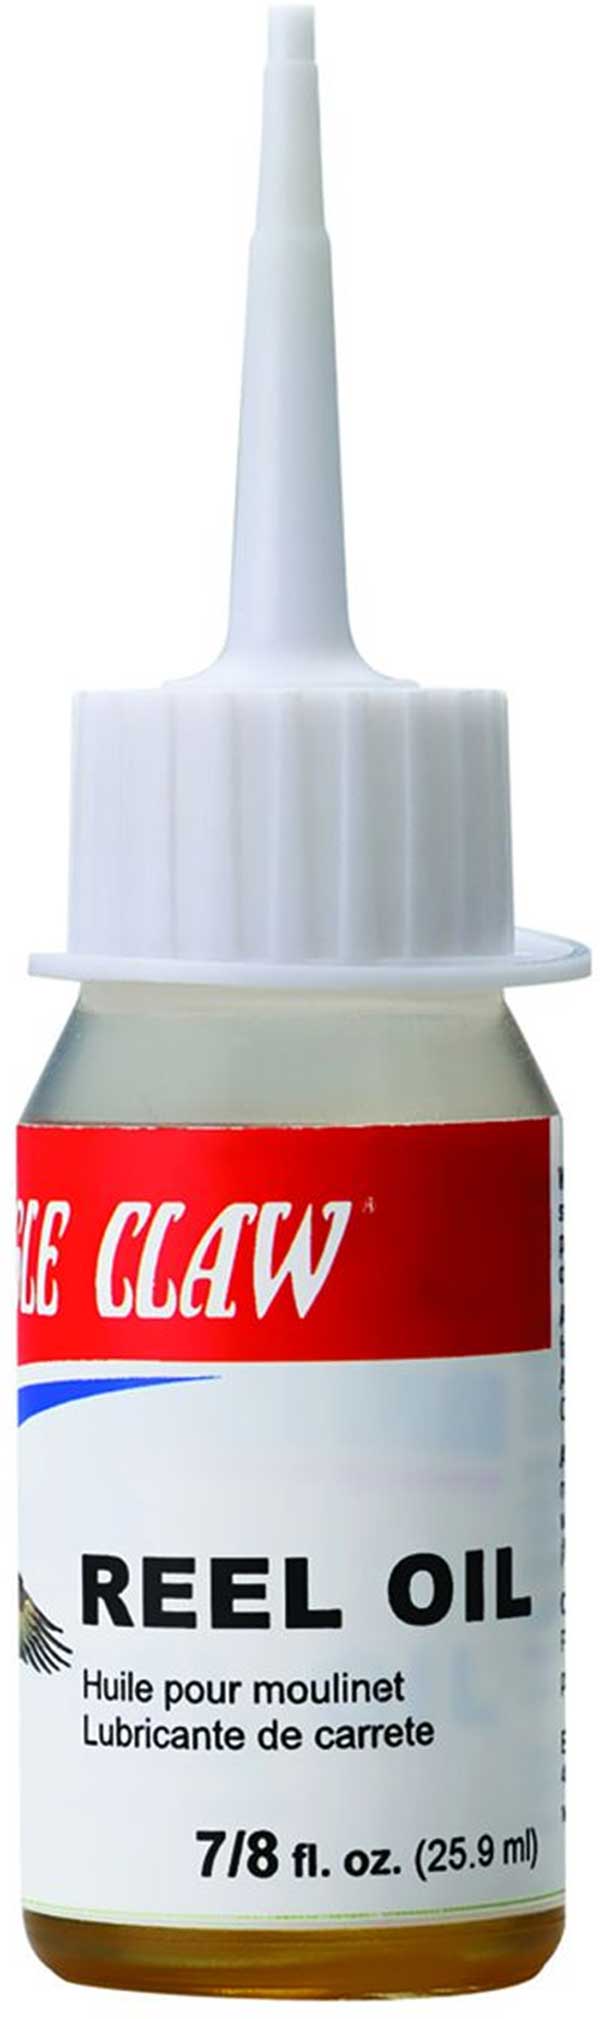 Eagle Claw Lubricant Reel Oil